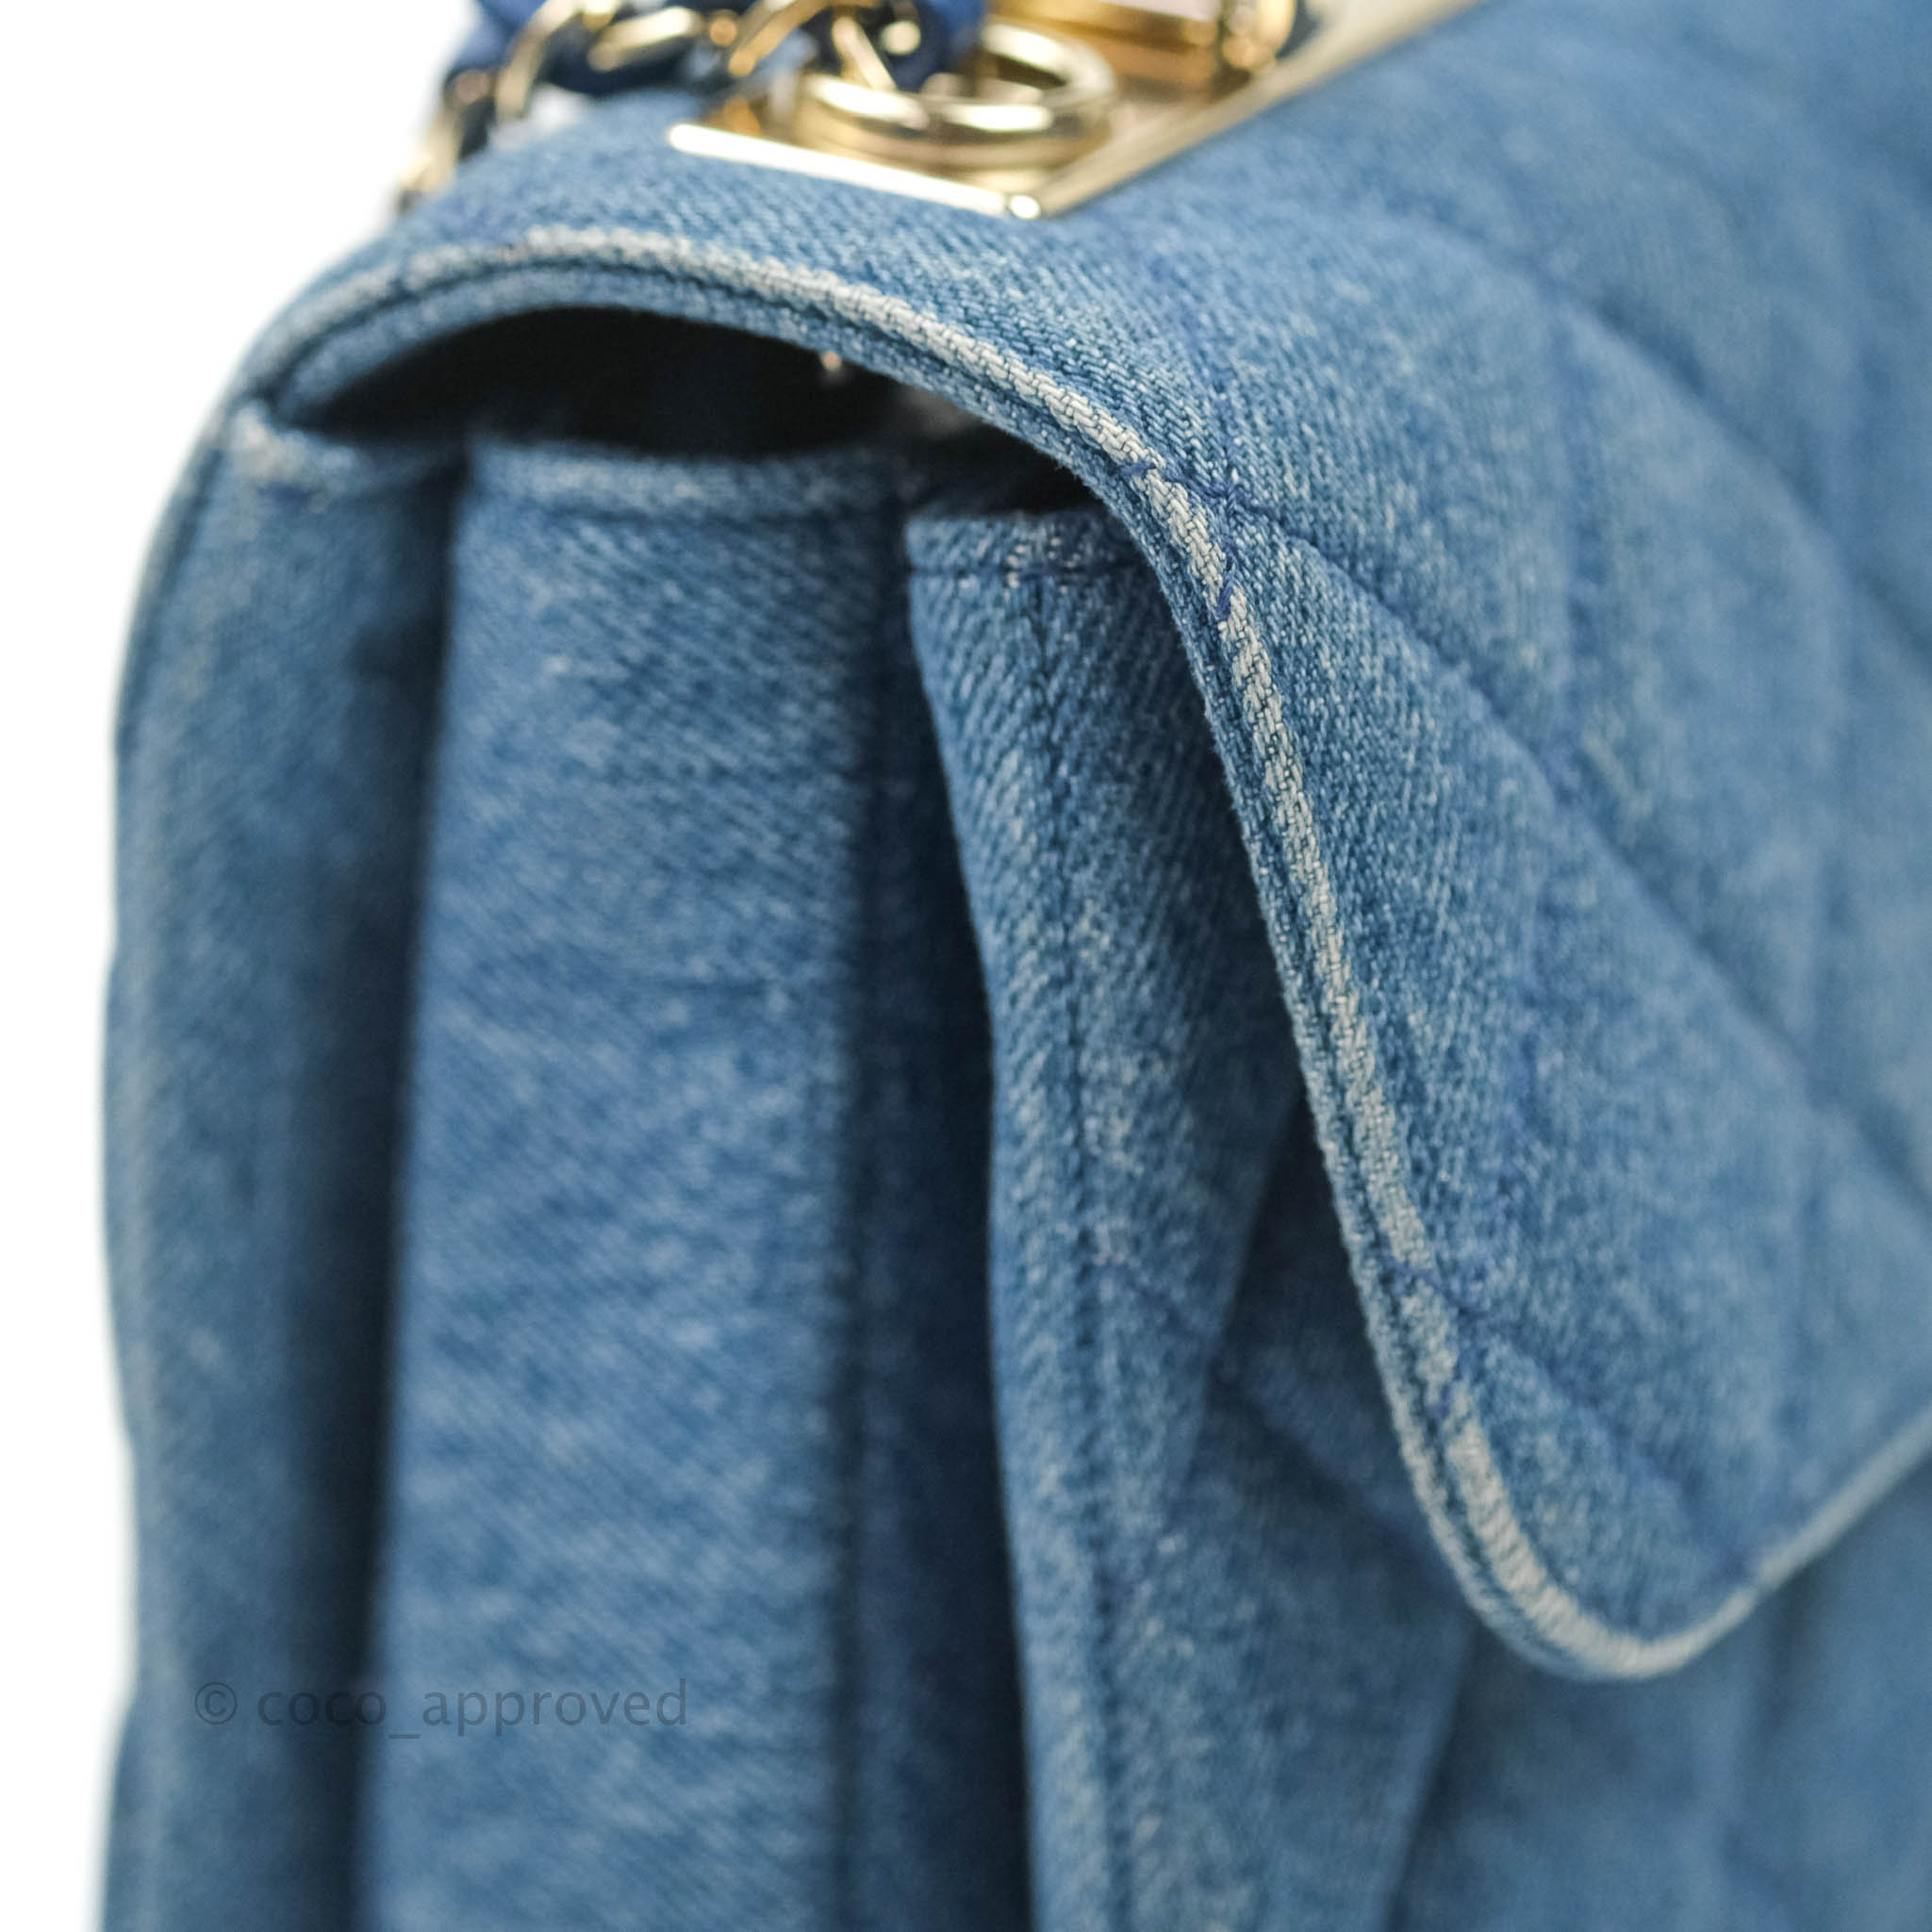 Chanel CHANEL Coco Button Denim Tops Jacket Navy P12923 – NUIR VINTAGE